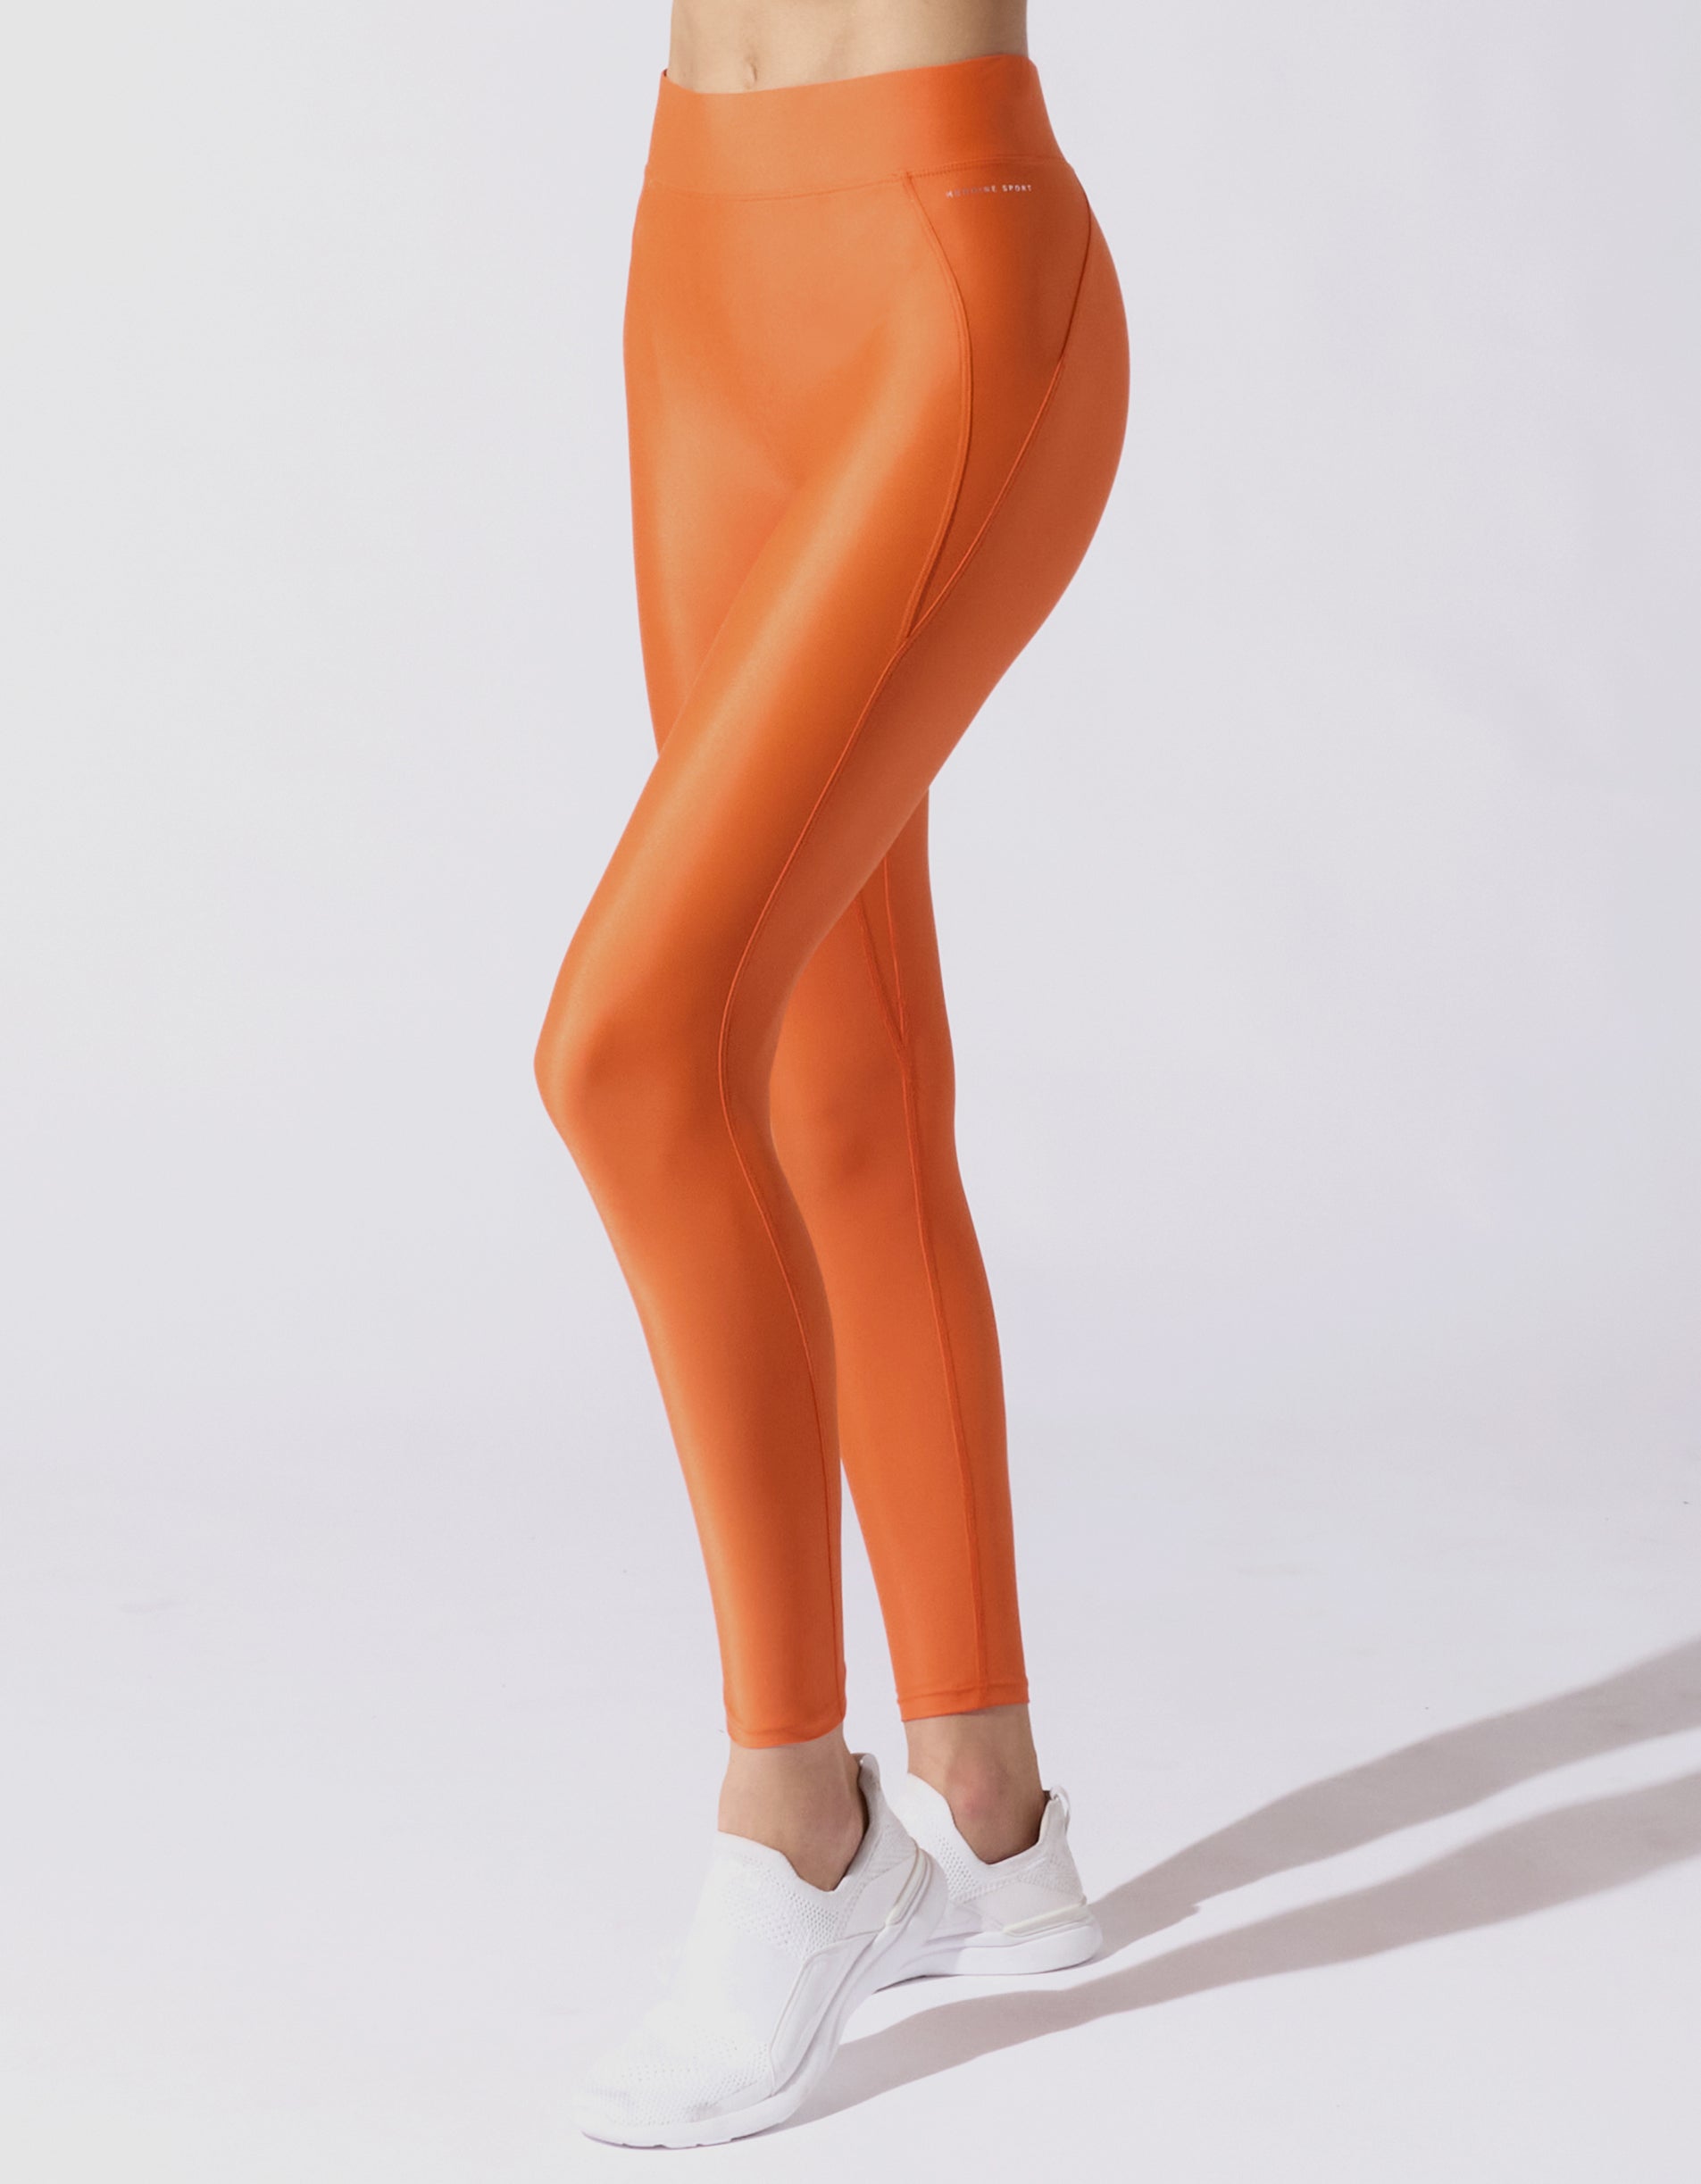 Tangerine Activewear Athletic Leggings for Women